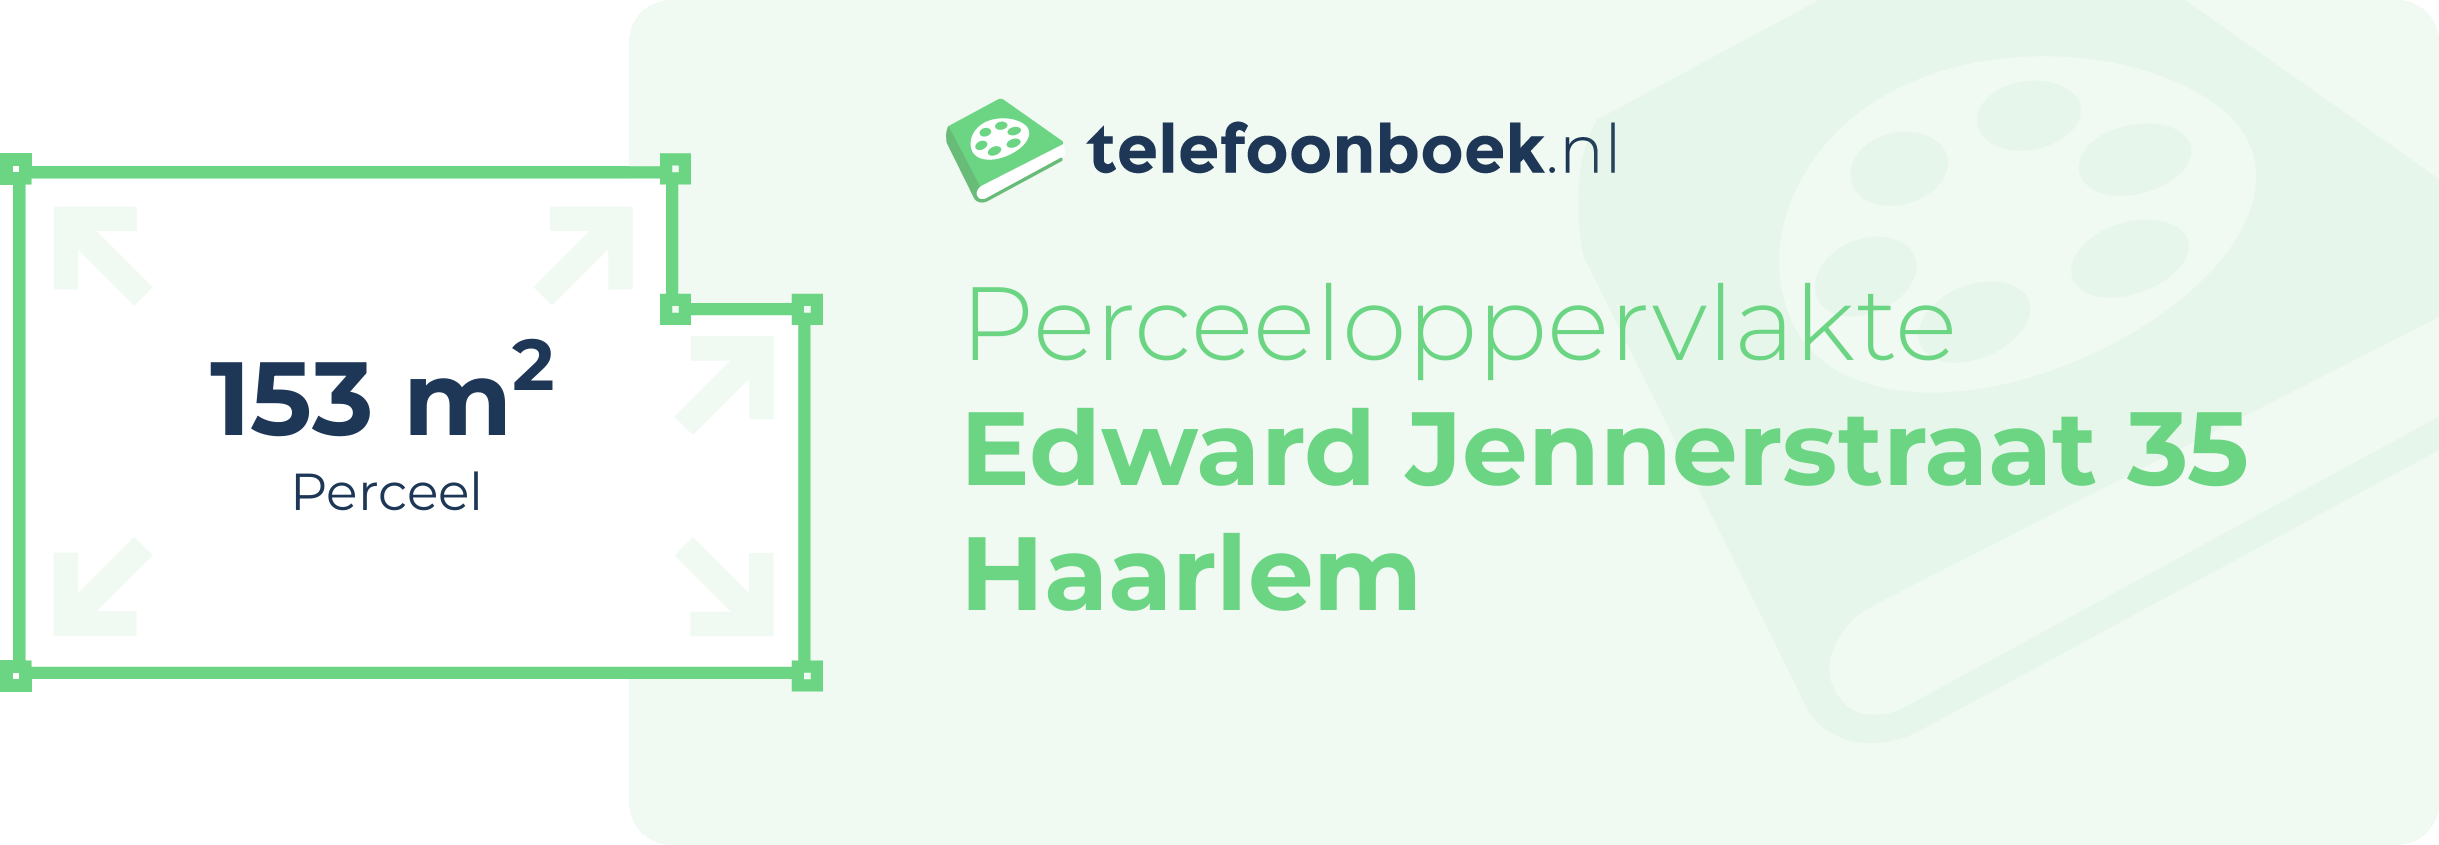 Perceeloppervlakte Edward Jennerstraat 35 Haarlem